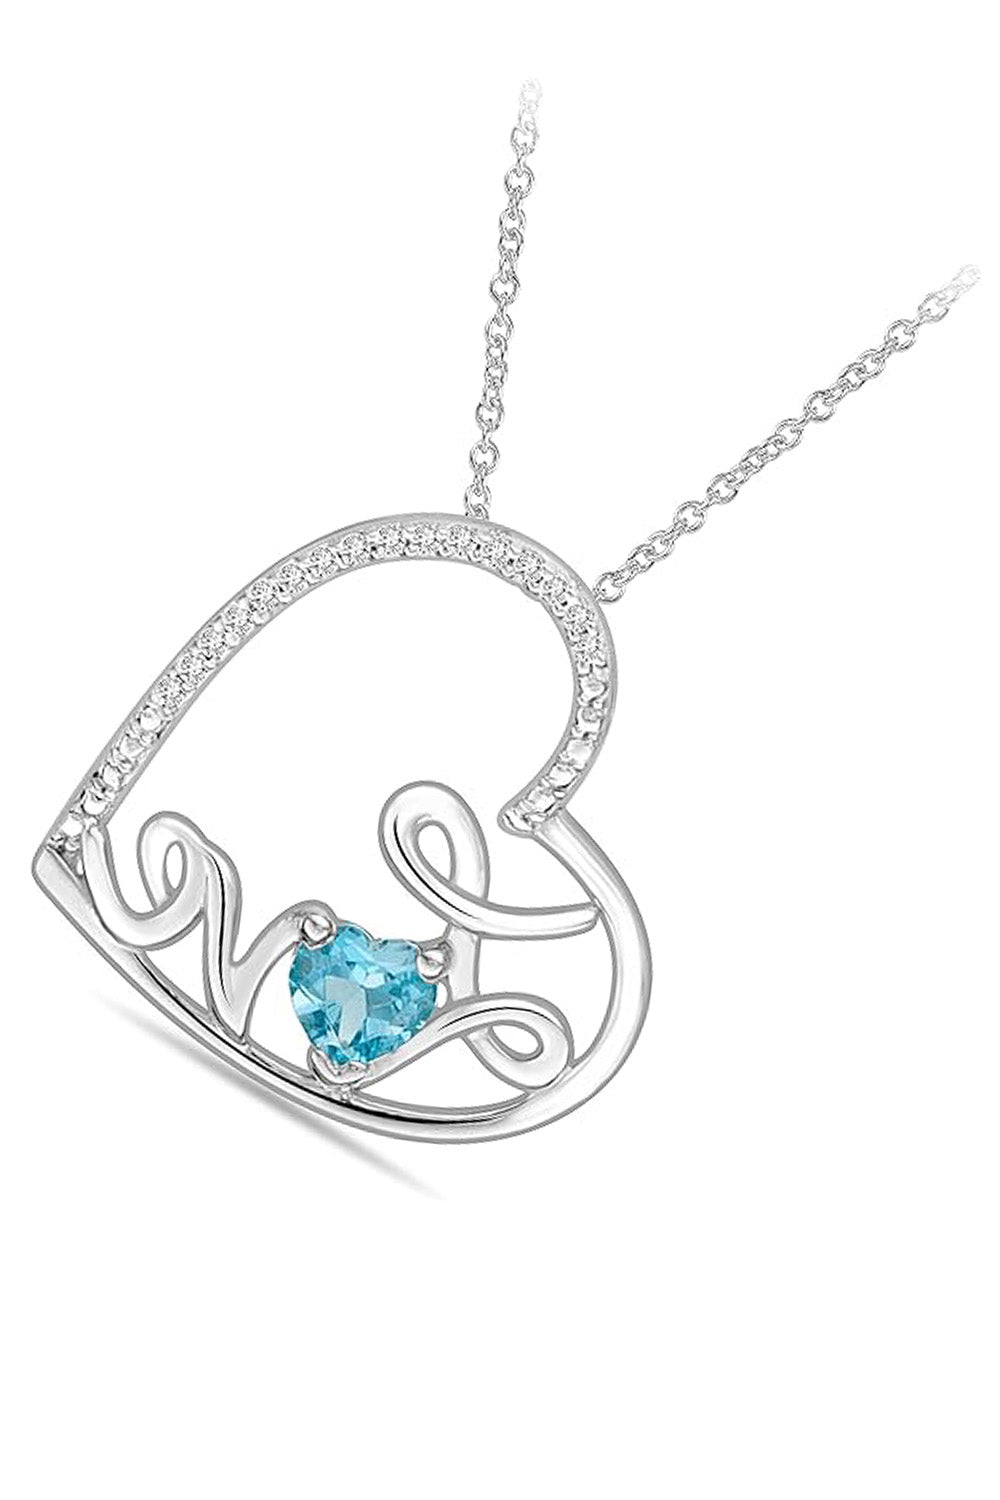 White Gold Color Blue Topaz Gemstone Love Heart Pendant Necklace